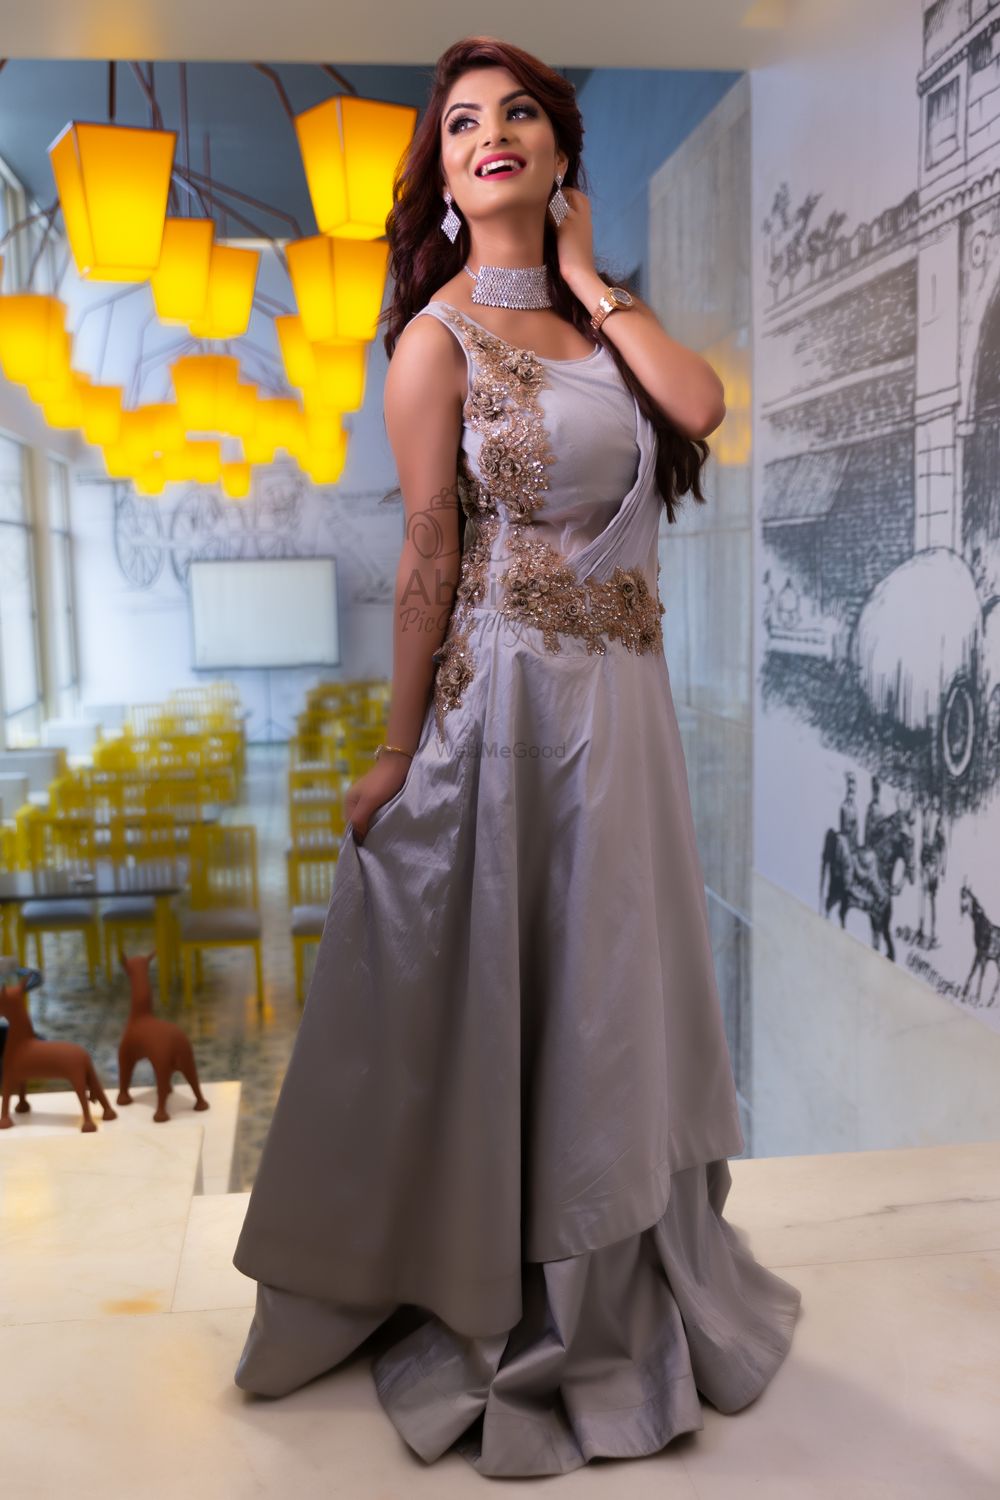 Photo By Anaya Fashion Luxuries - Bridal Wear